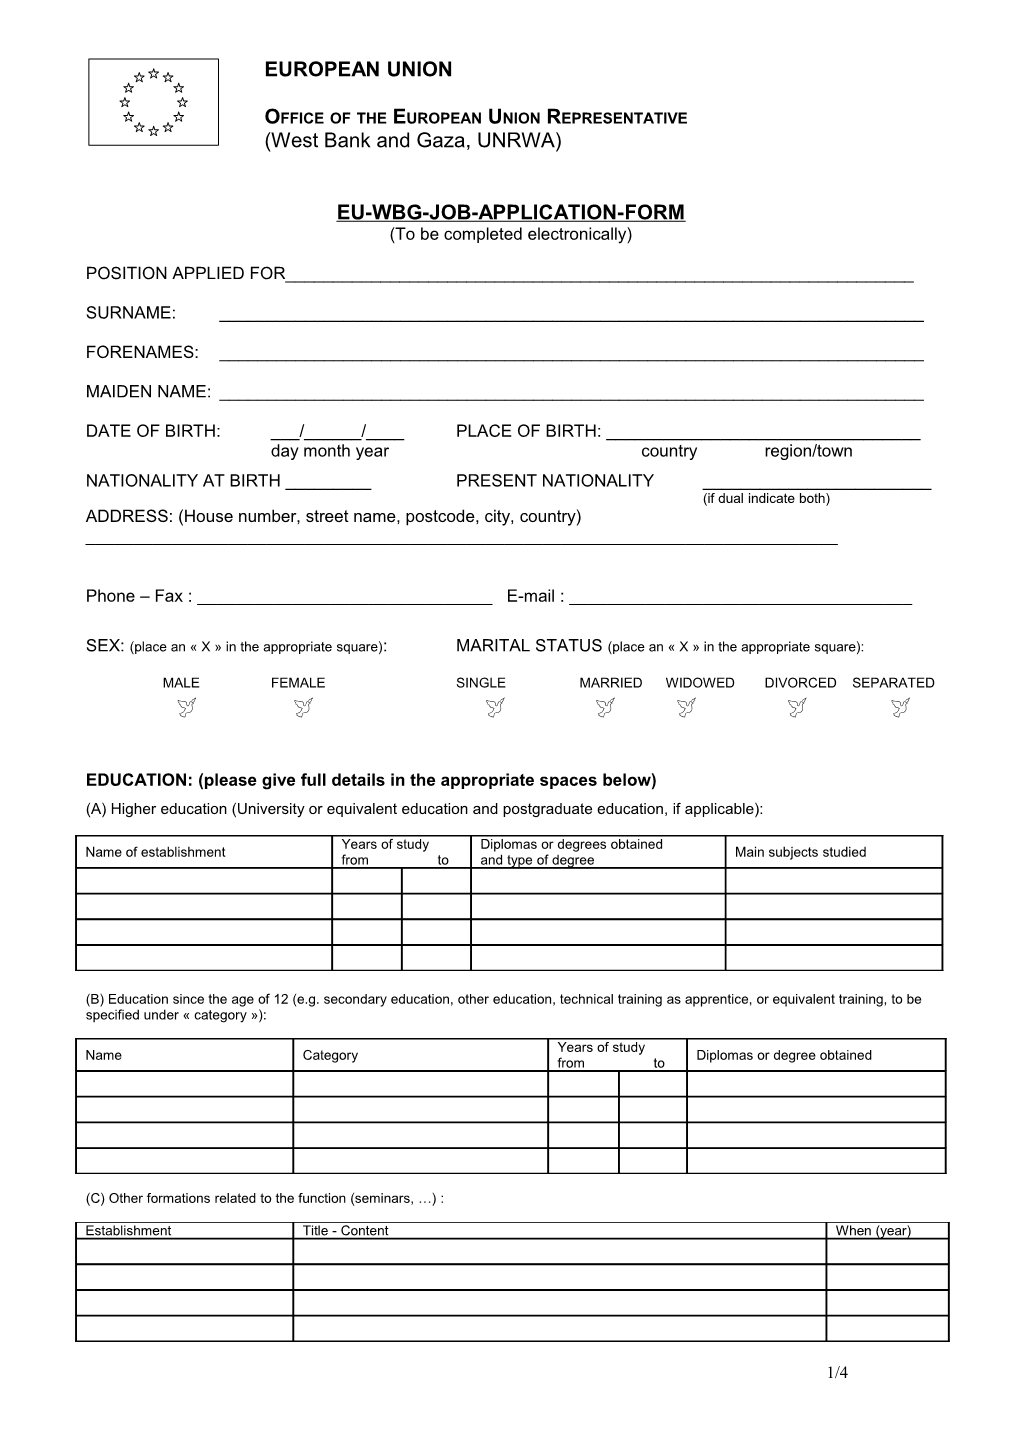 Eu-Wbg-Job-Application-Form